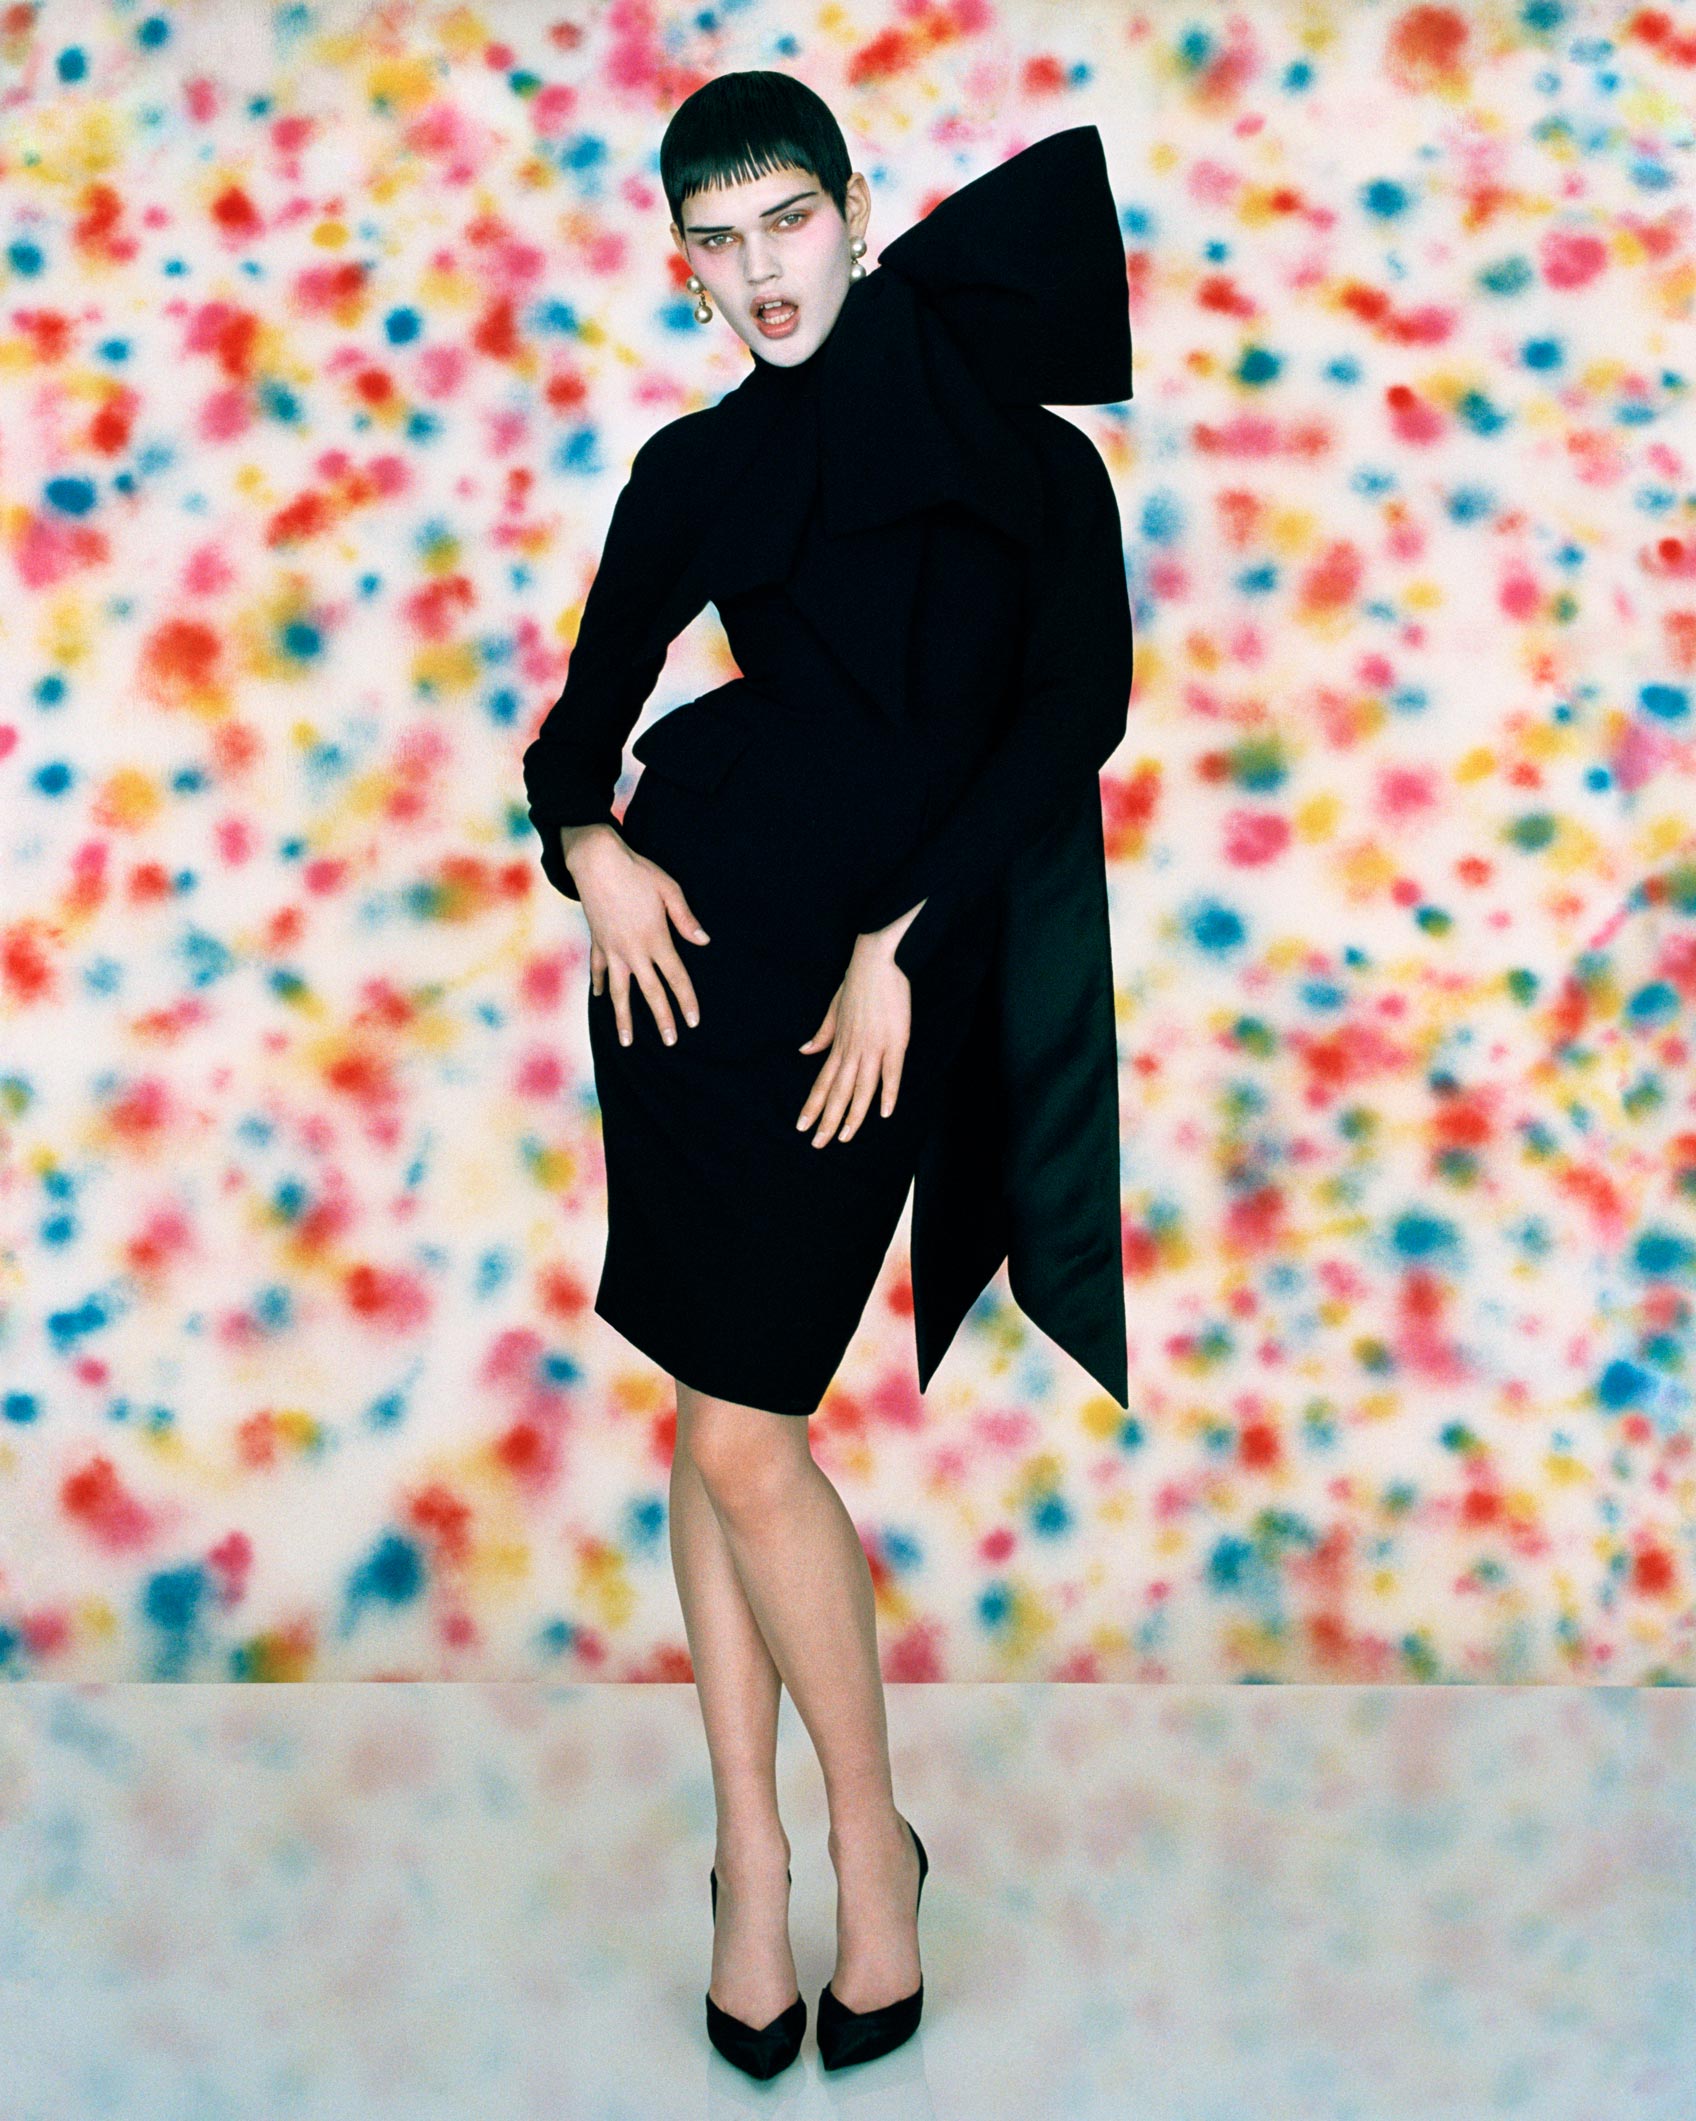 Vogue Japan by Hugo Comte 22 | Hugo Comte | Dior | Vogue Japan | Ally Macrae | Numerique Retouch Photo Retouching Studio